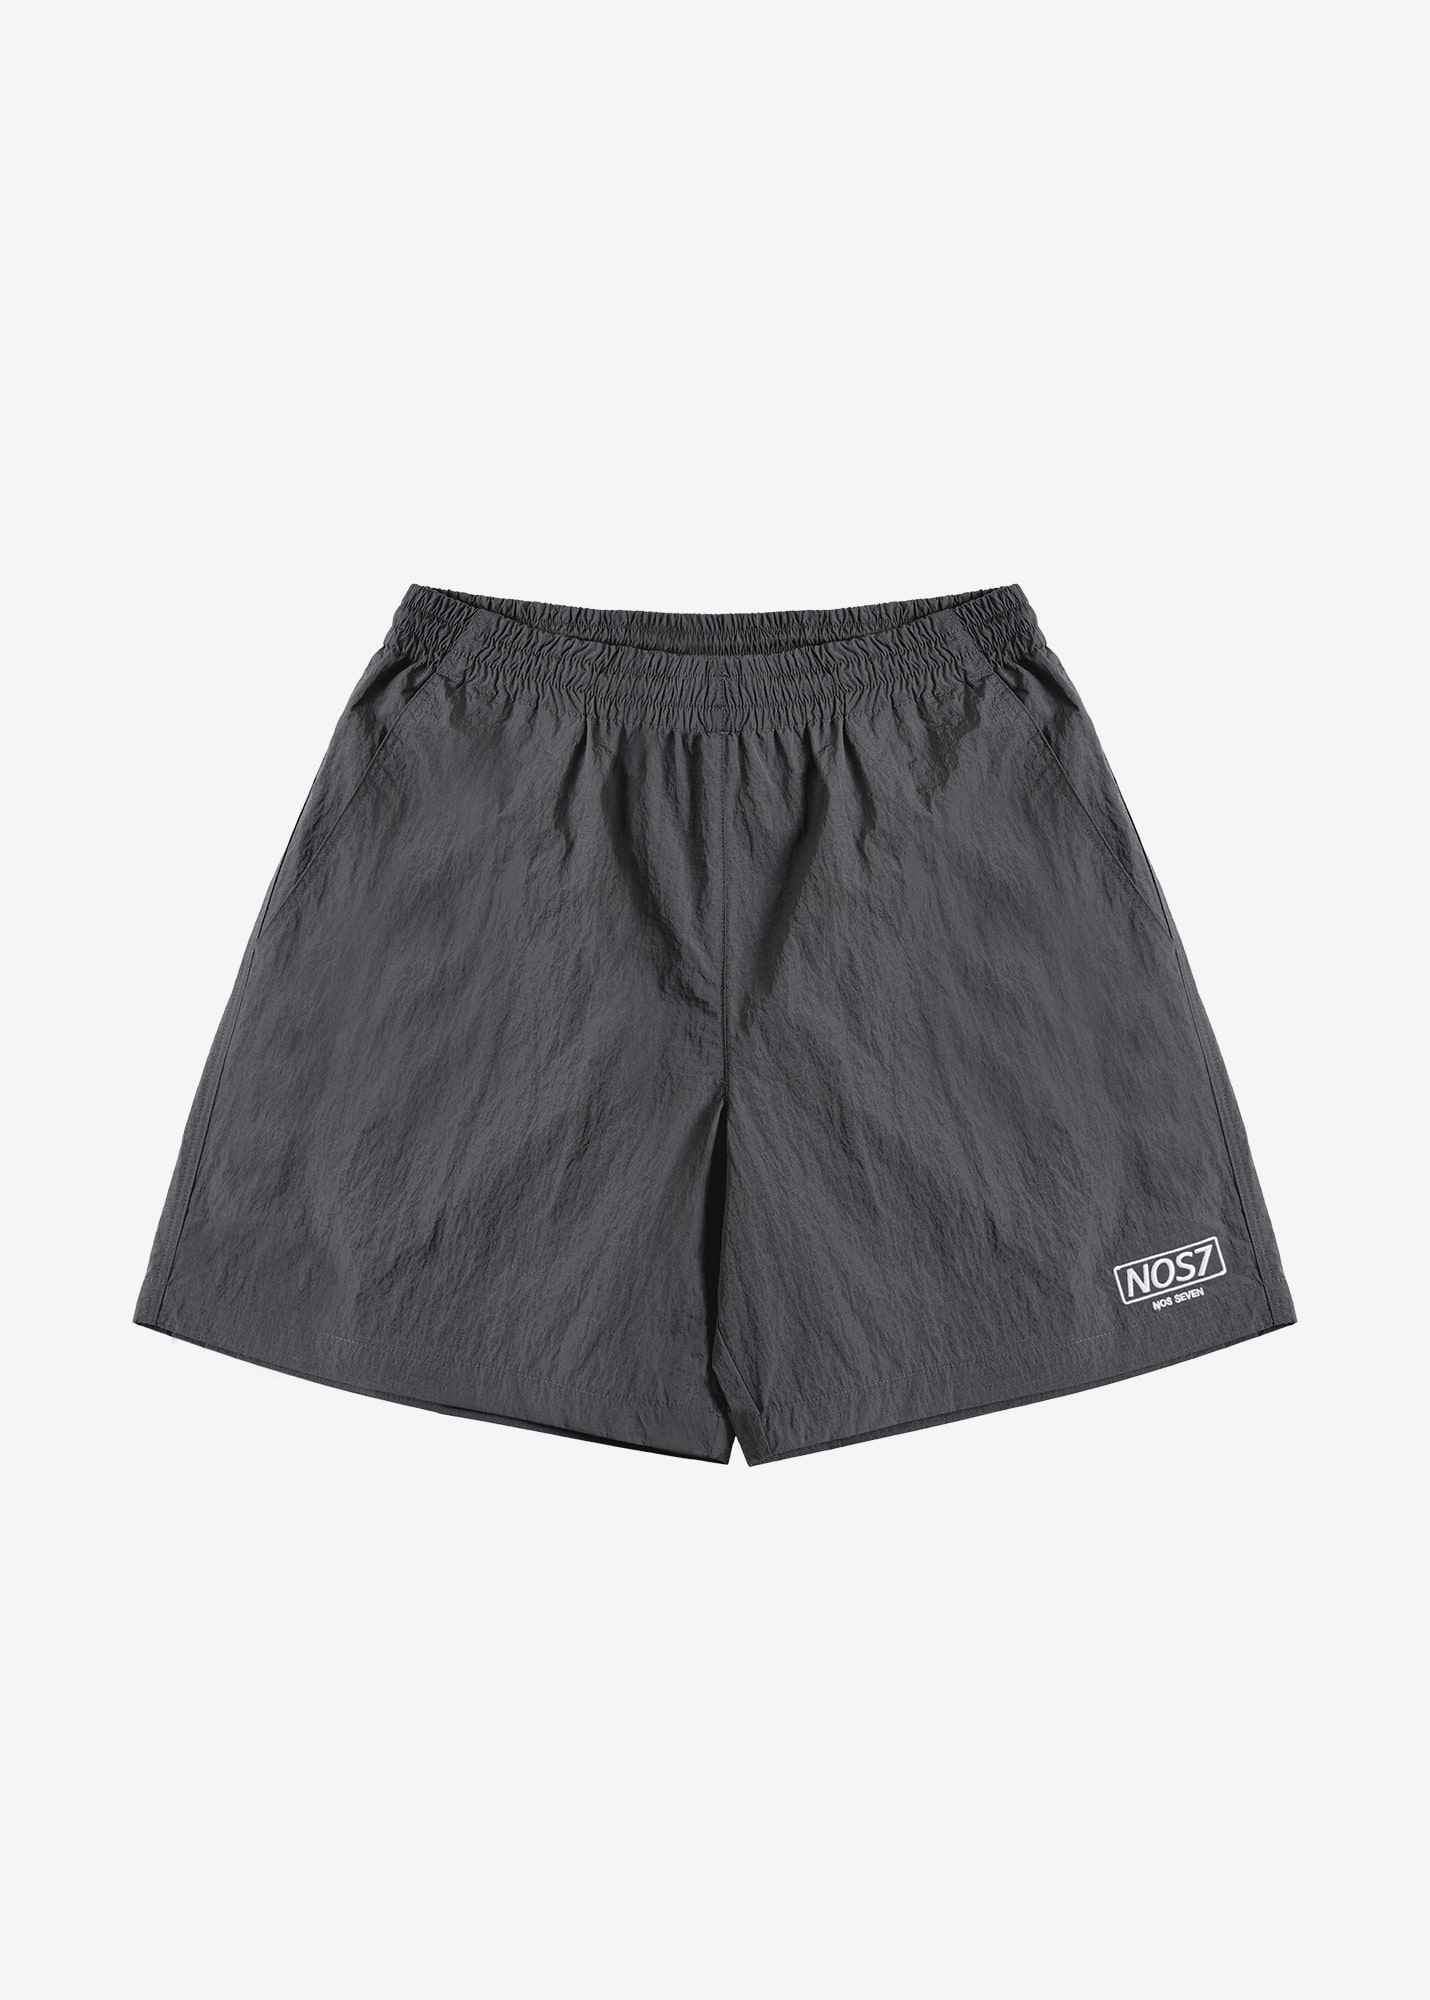 Square Shorts - Charcoal